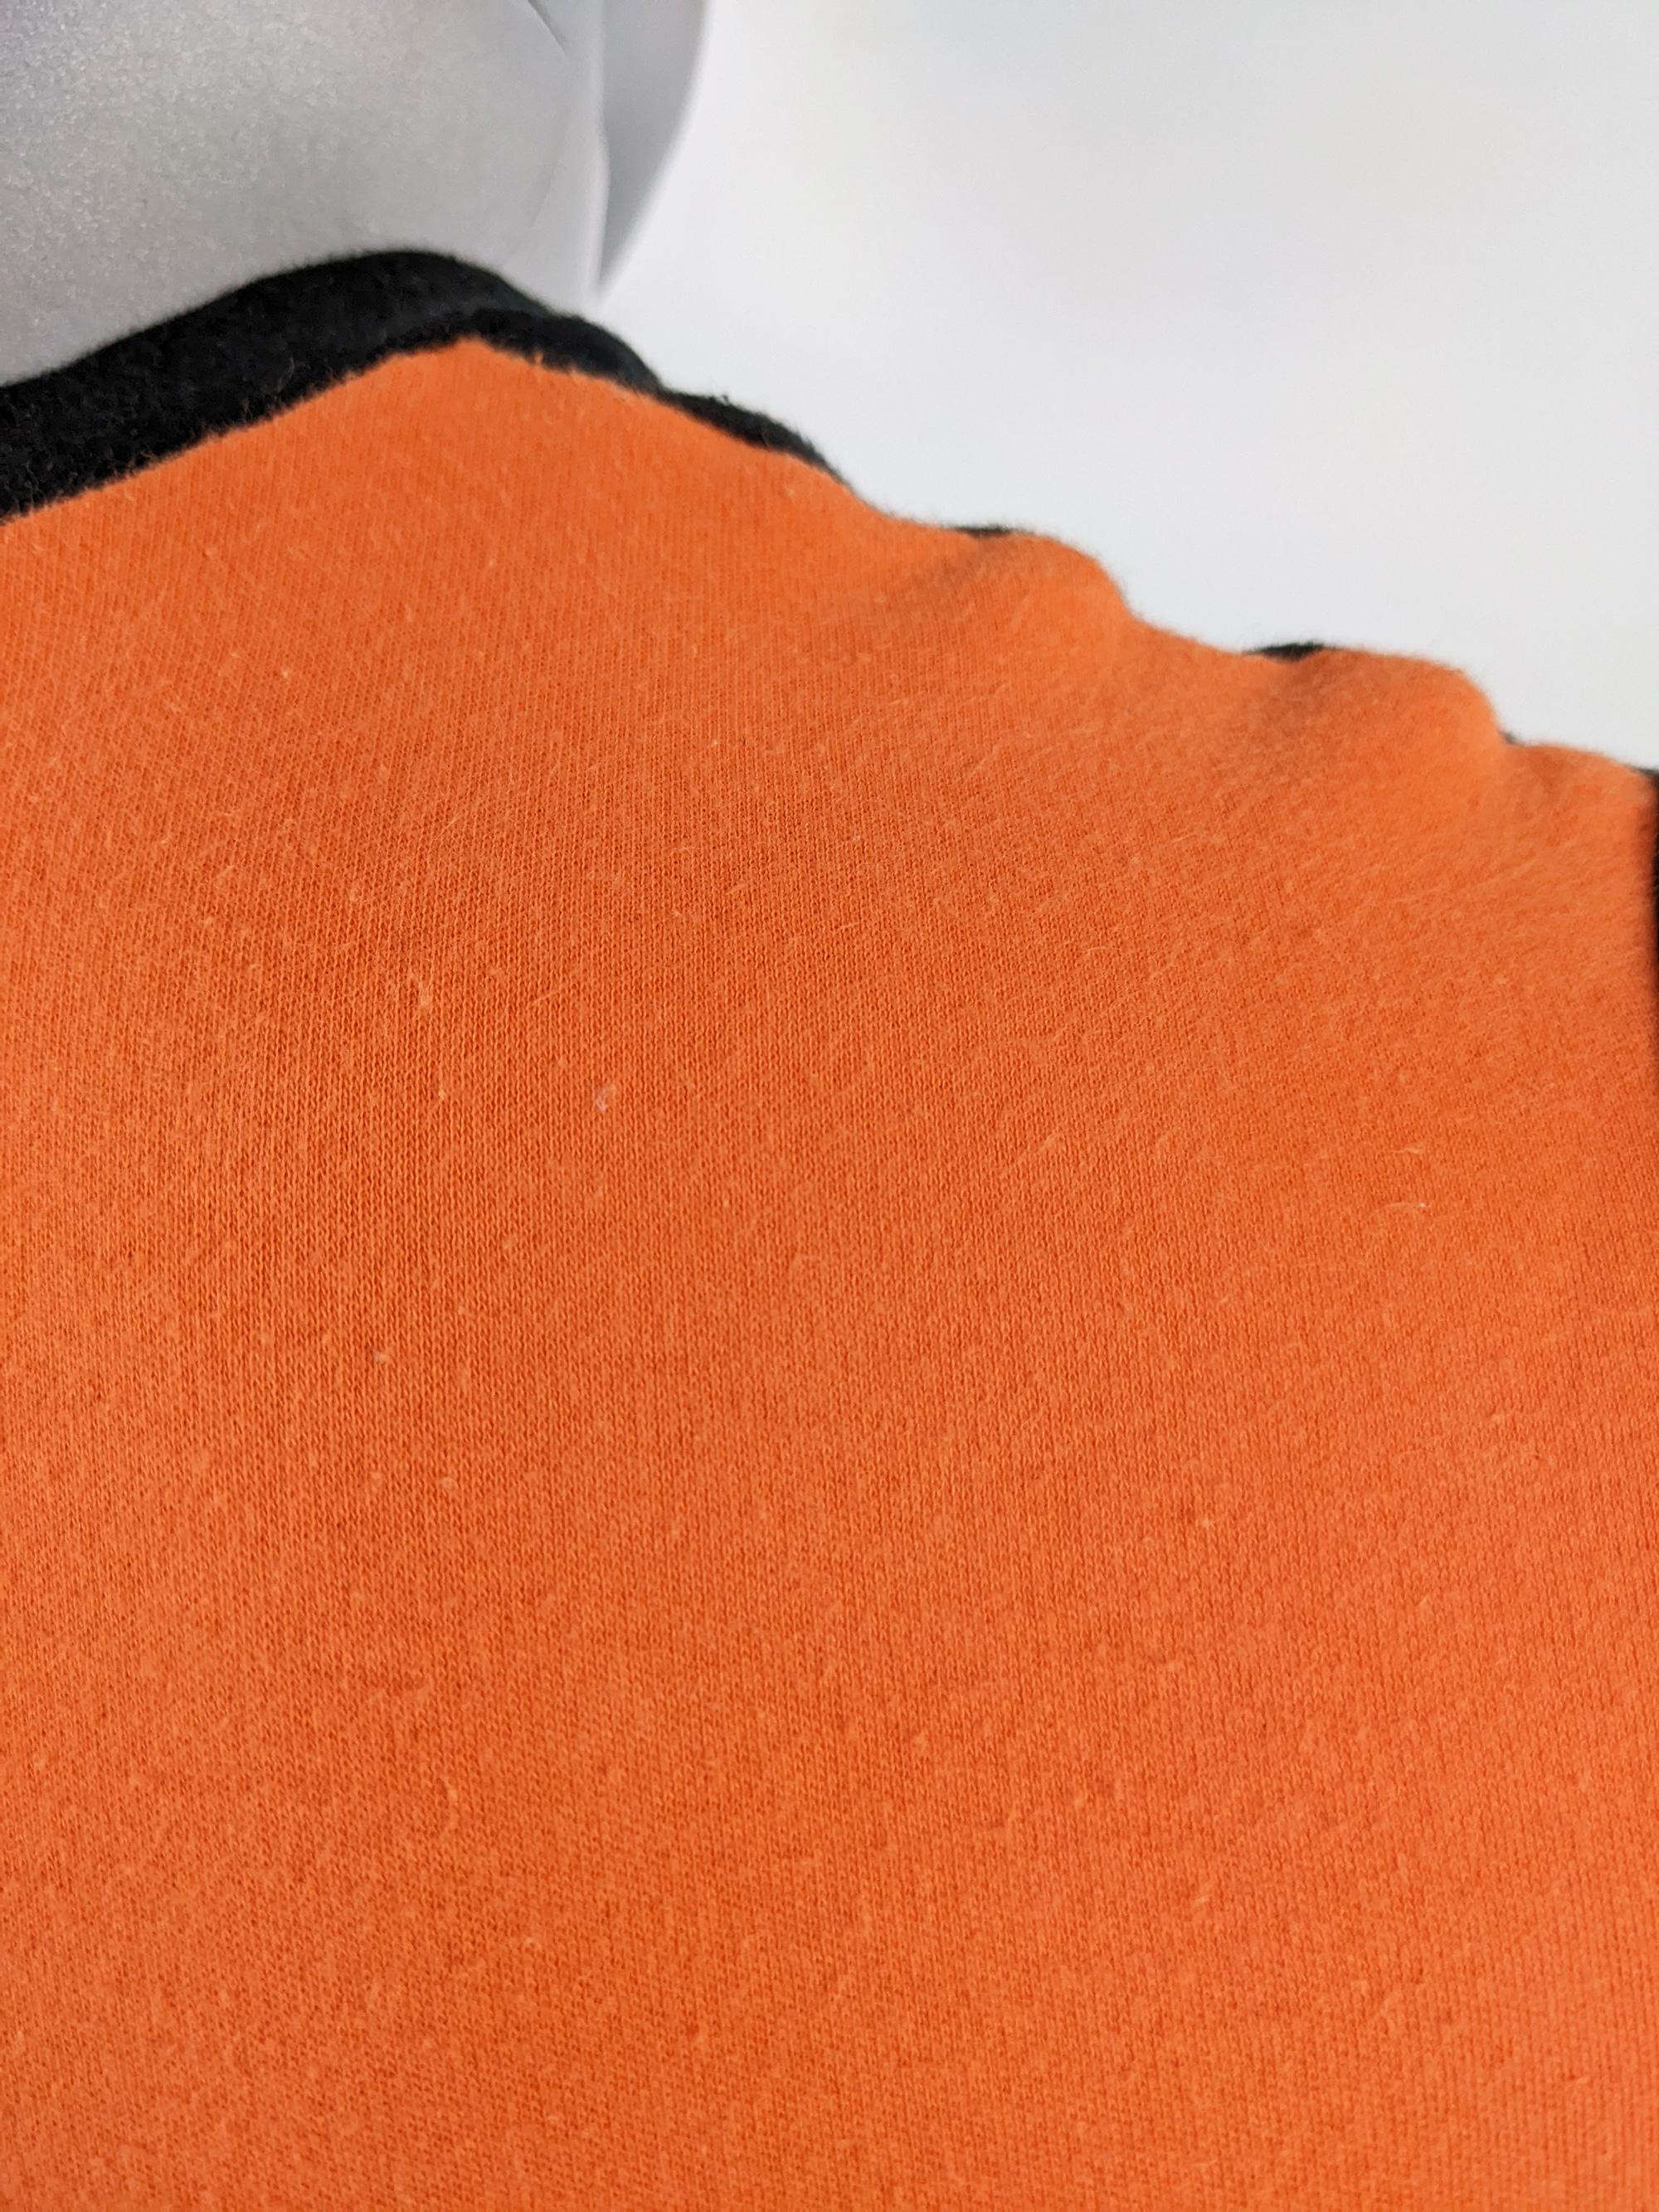 Alexandre Herchcovitch Mens Vintage Sleeveless Black & Orange T Shirt, 2000s 1